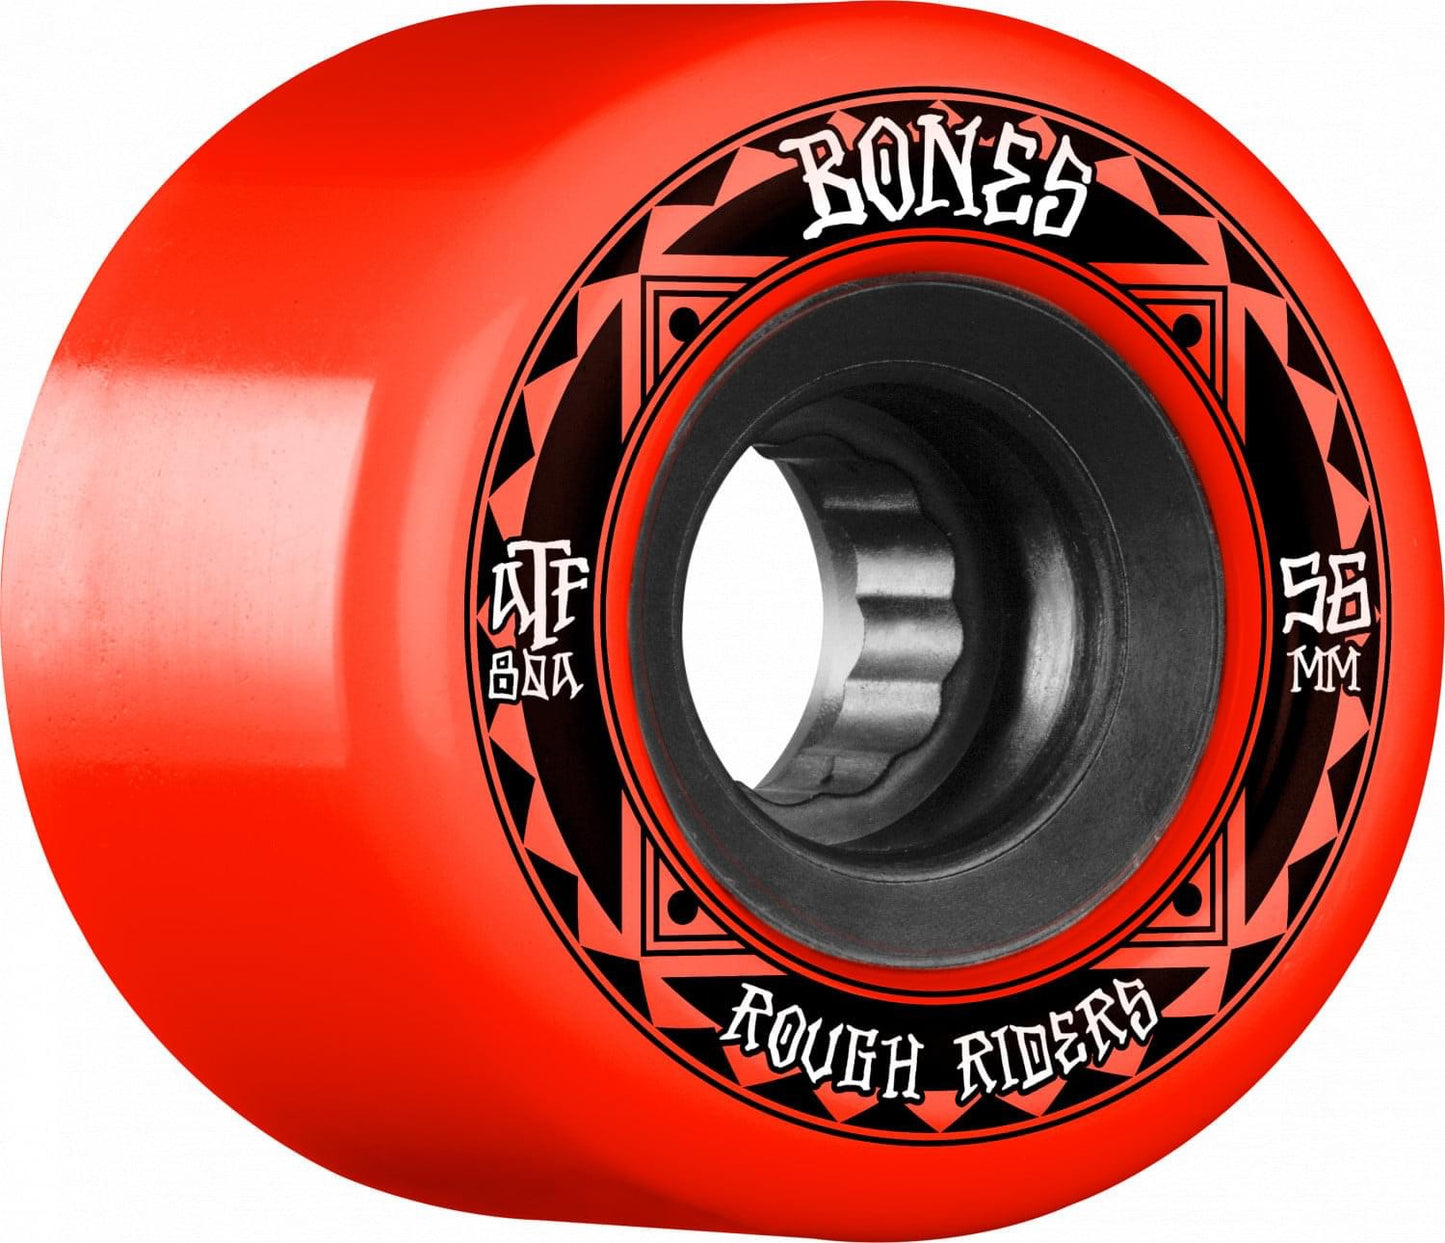 Bones skateboard wheels Rough riders ATF 4 pack 56mm 80a